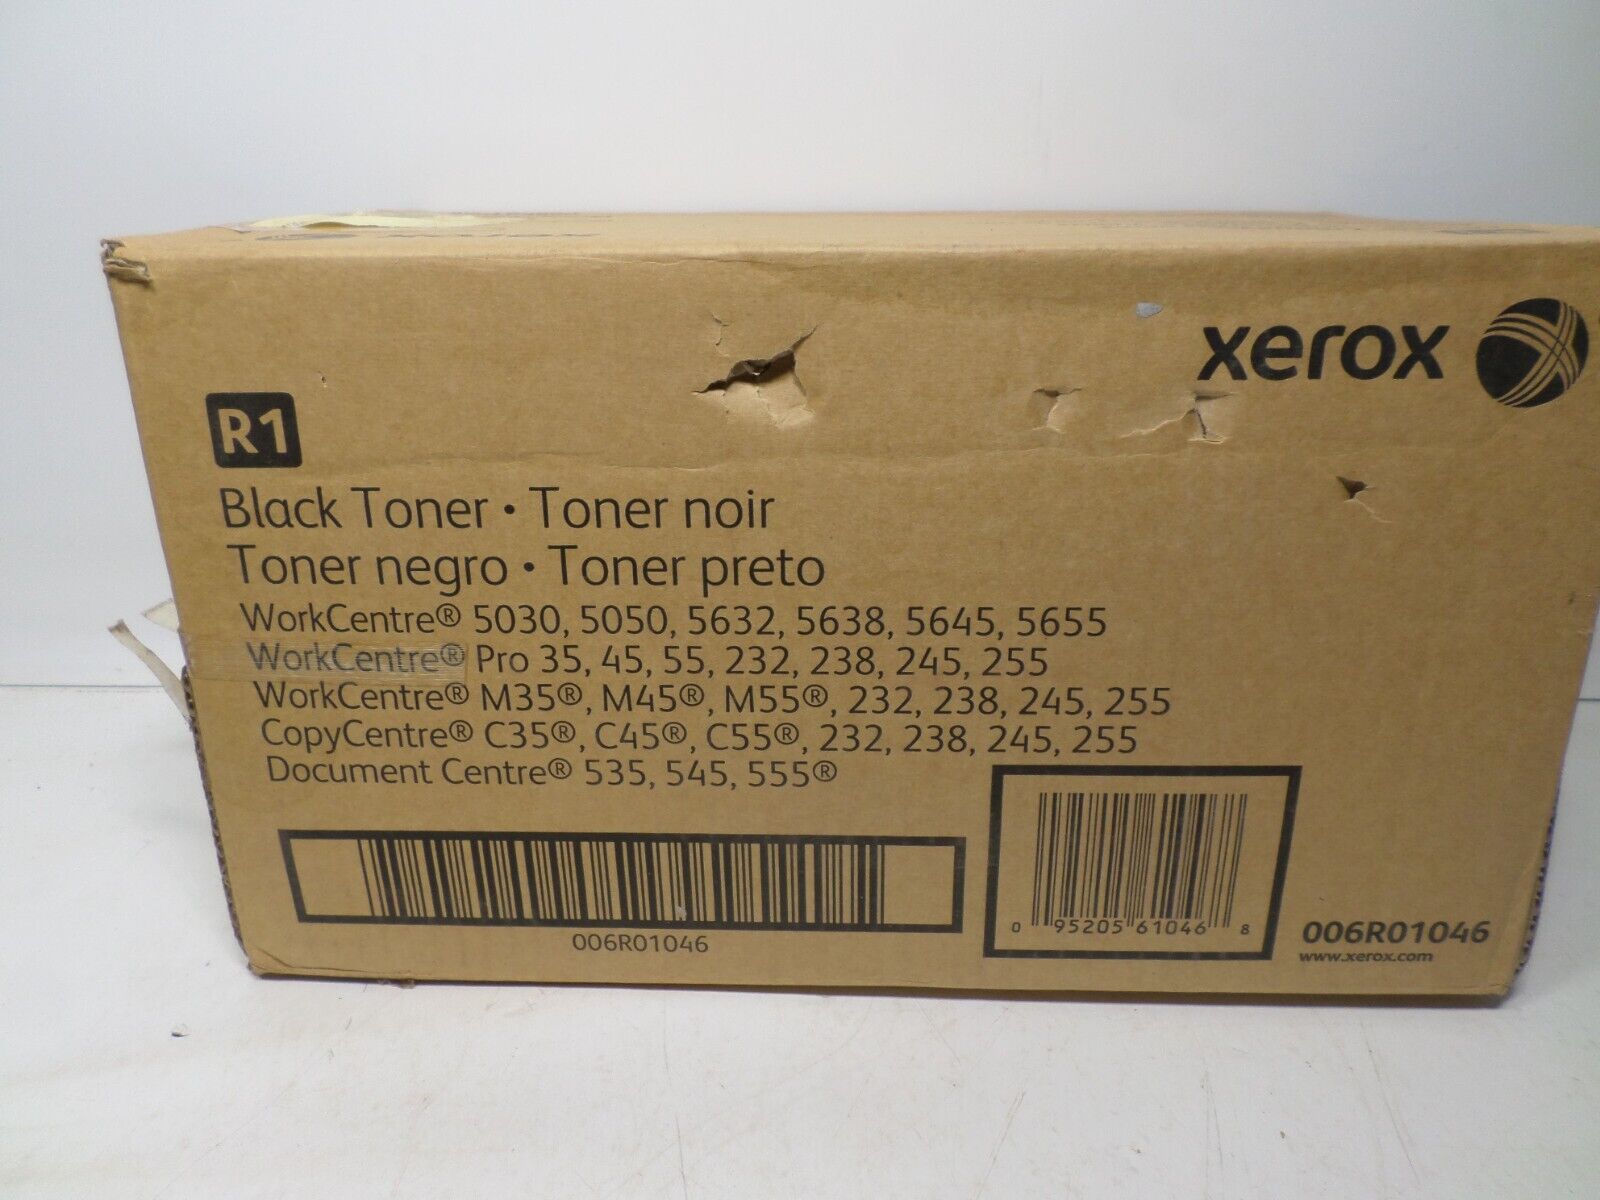 GENUINE Xerox R1 Black Toner 2 Cartridge 1 WASTE TONER  006R01046